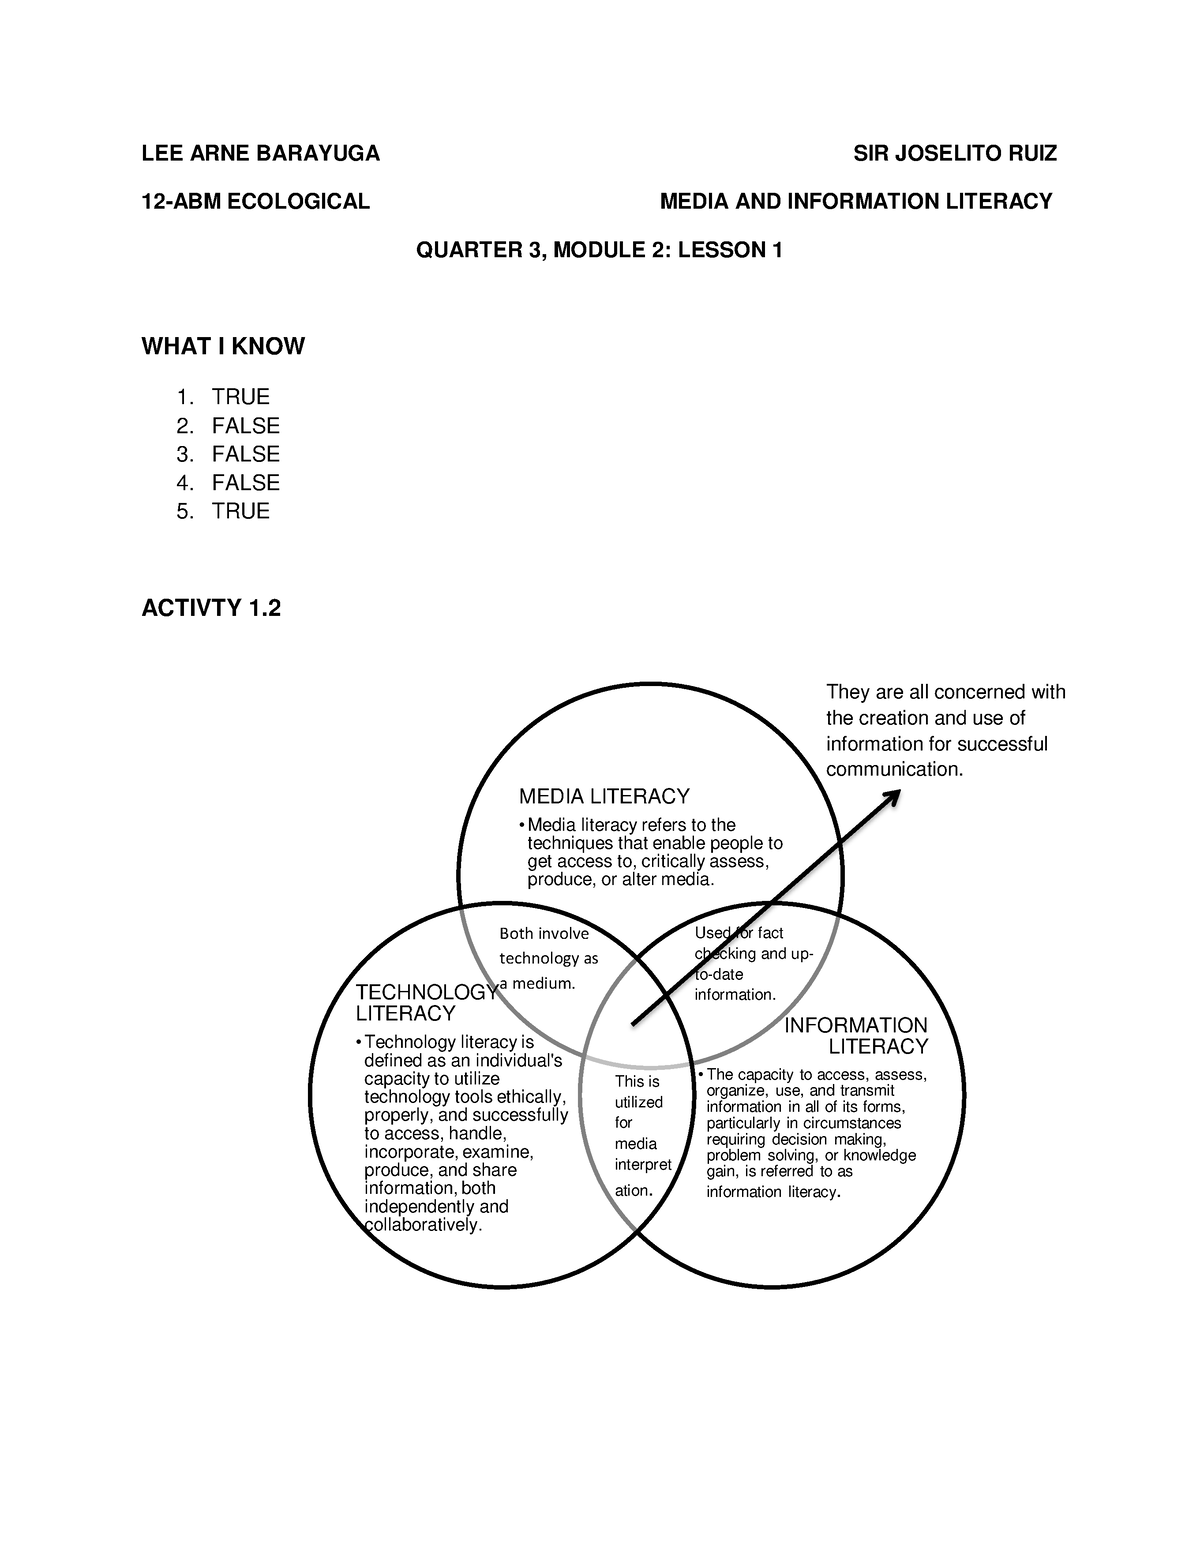 media-technology-and-information-literacy-similarities-venn-diagram